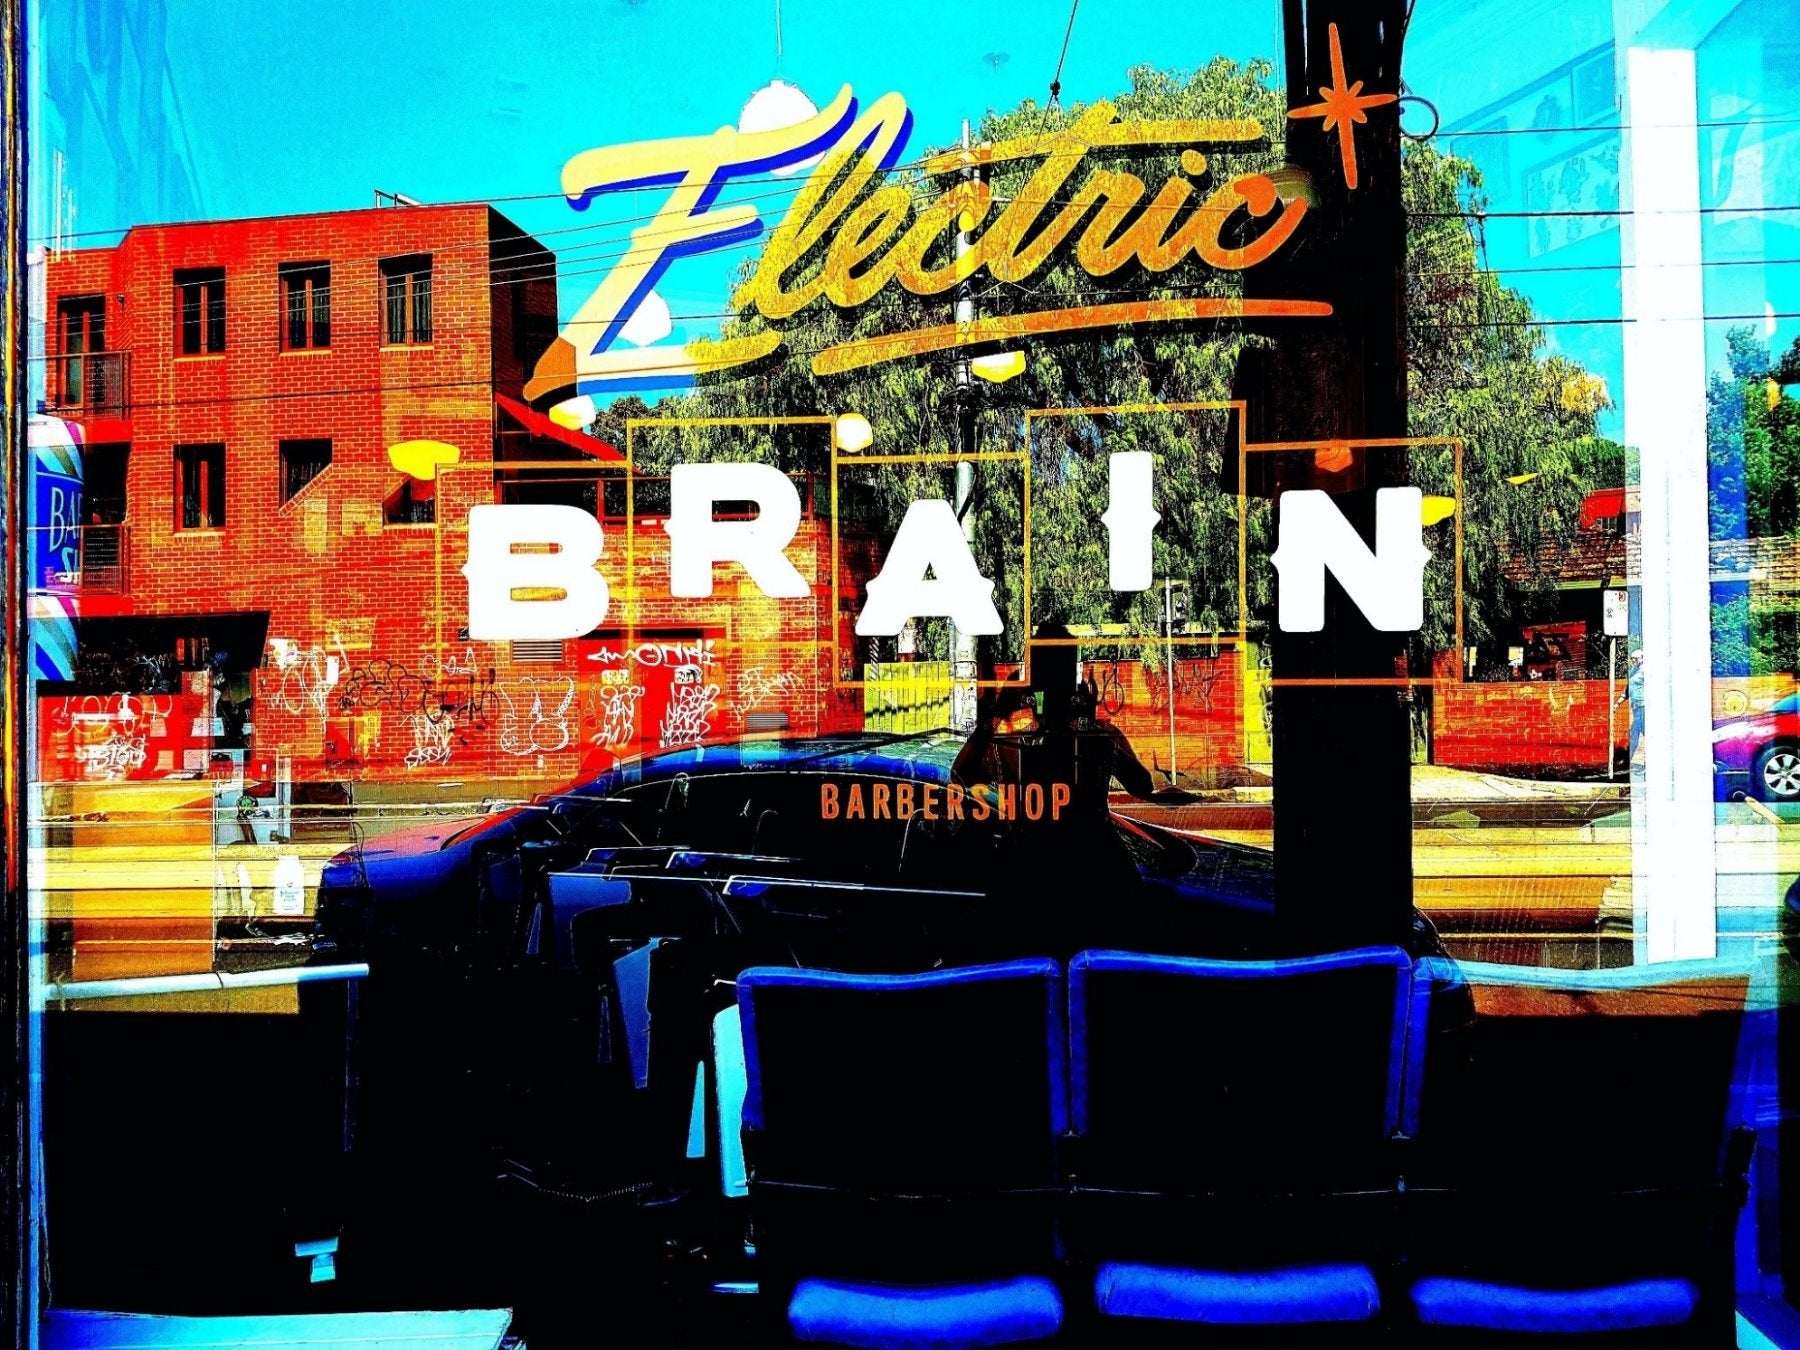 'Electric Brain'